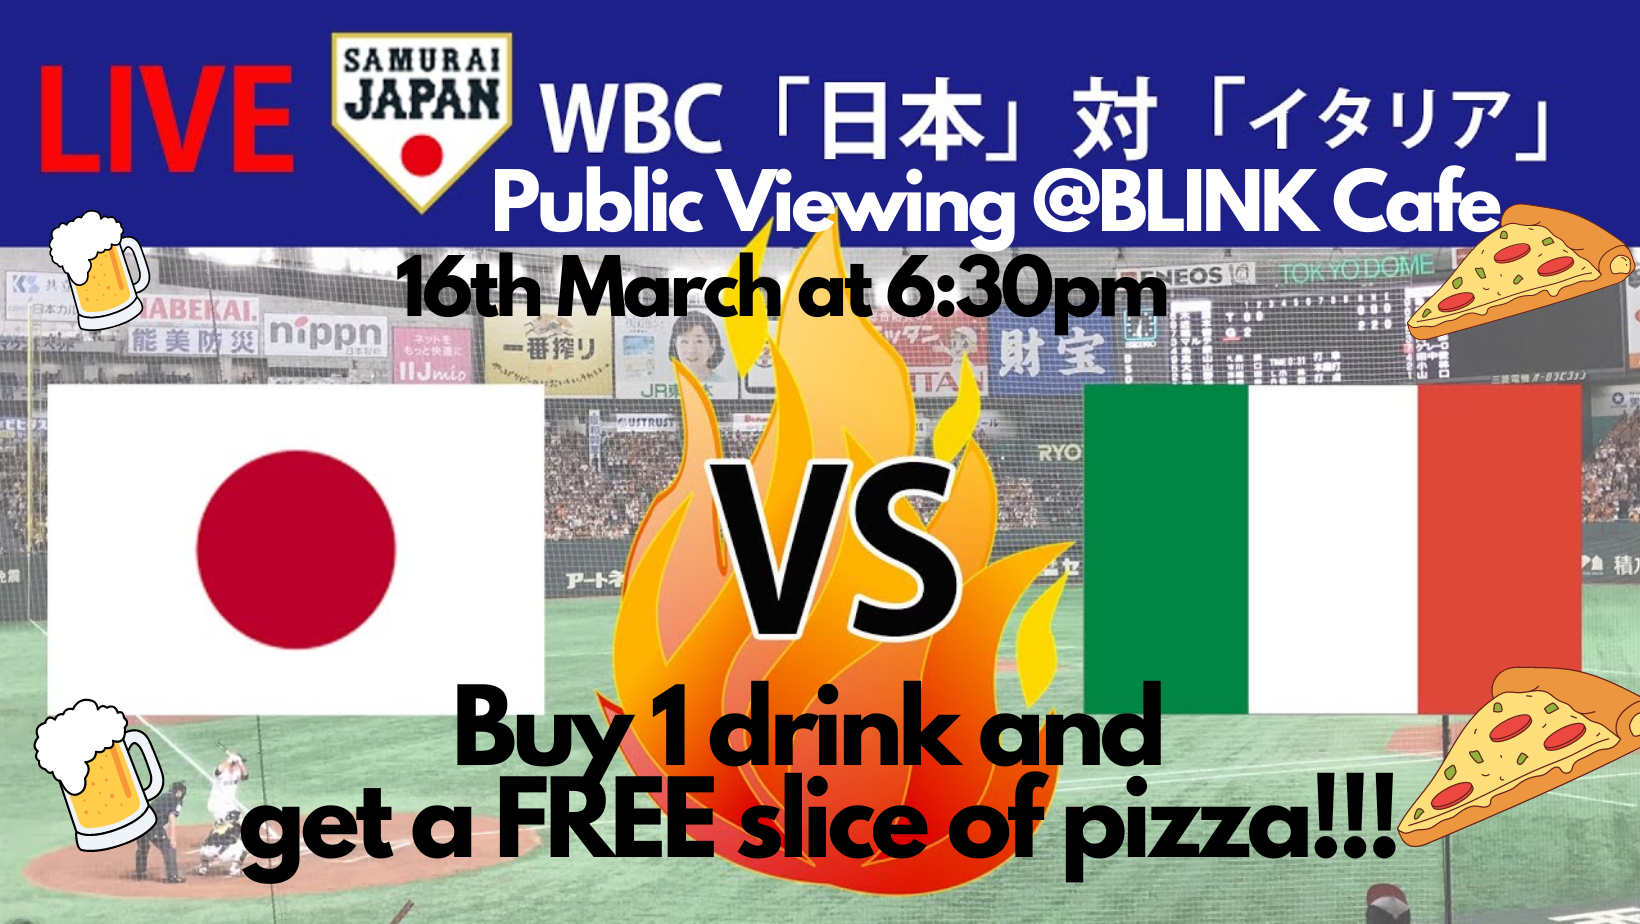 WBC Japan VS Italy PUBLIC VIEWING